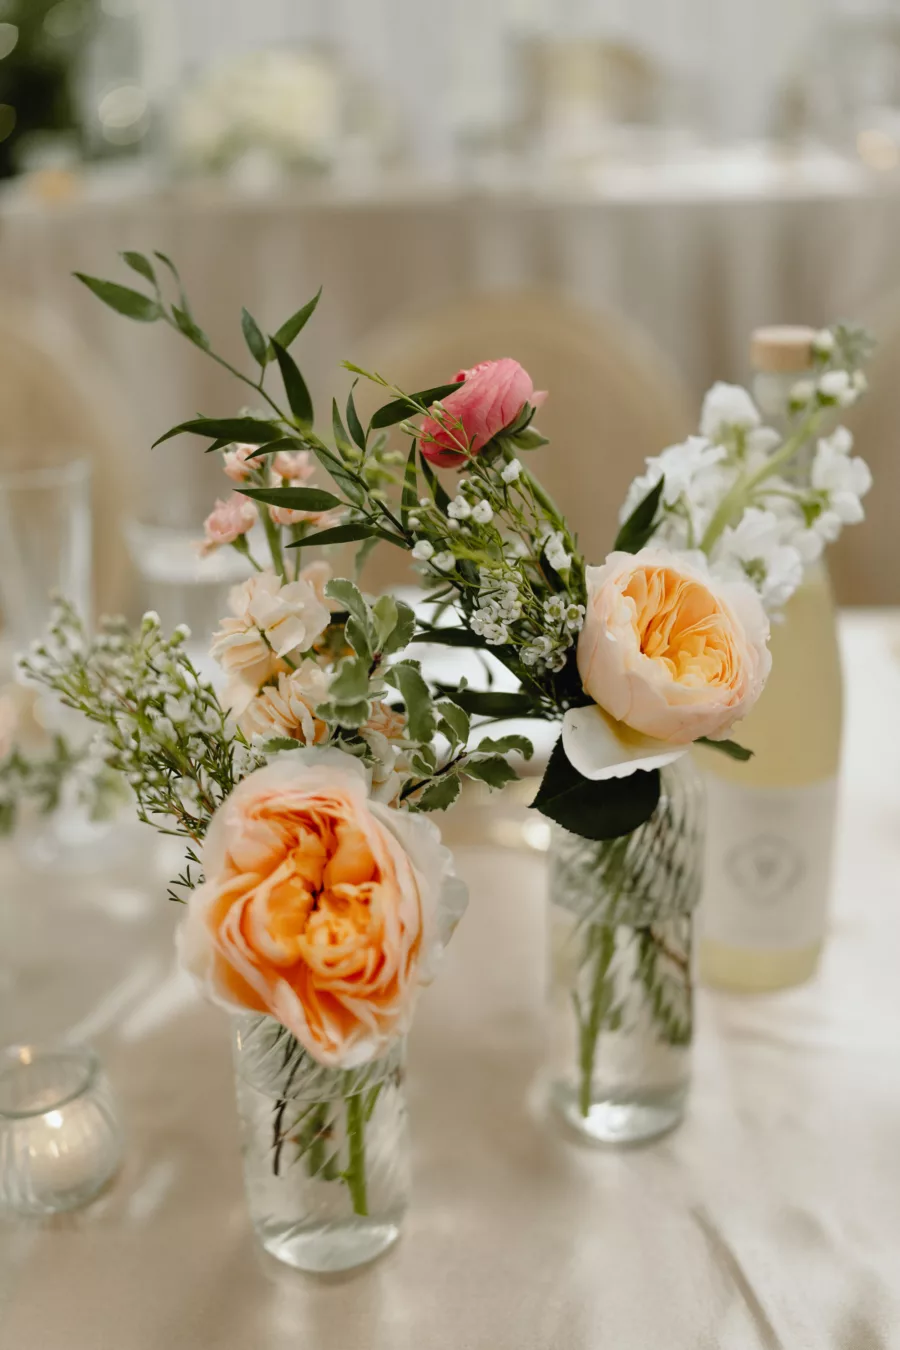 Classic Blush Pink Garden Rose, Baby's Breath, and Greenery Wedding Reception Centerpiece Bud Vase Decor Ideas